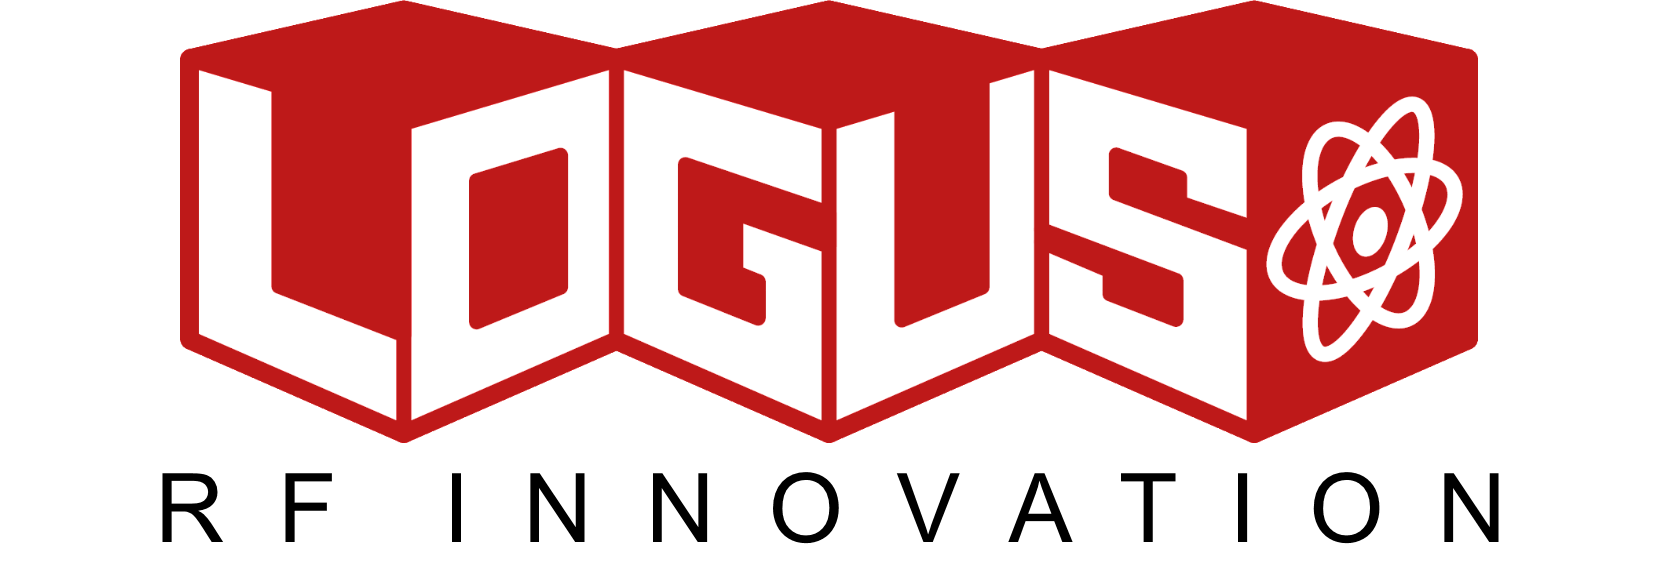 Logus Microwave Logo